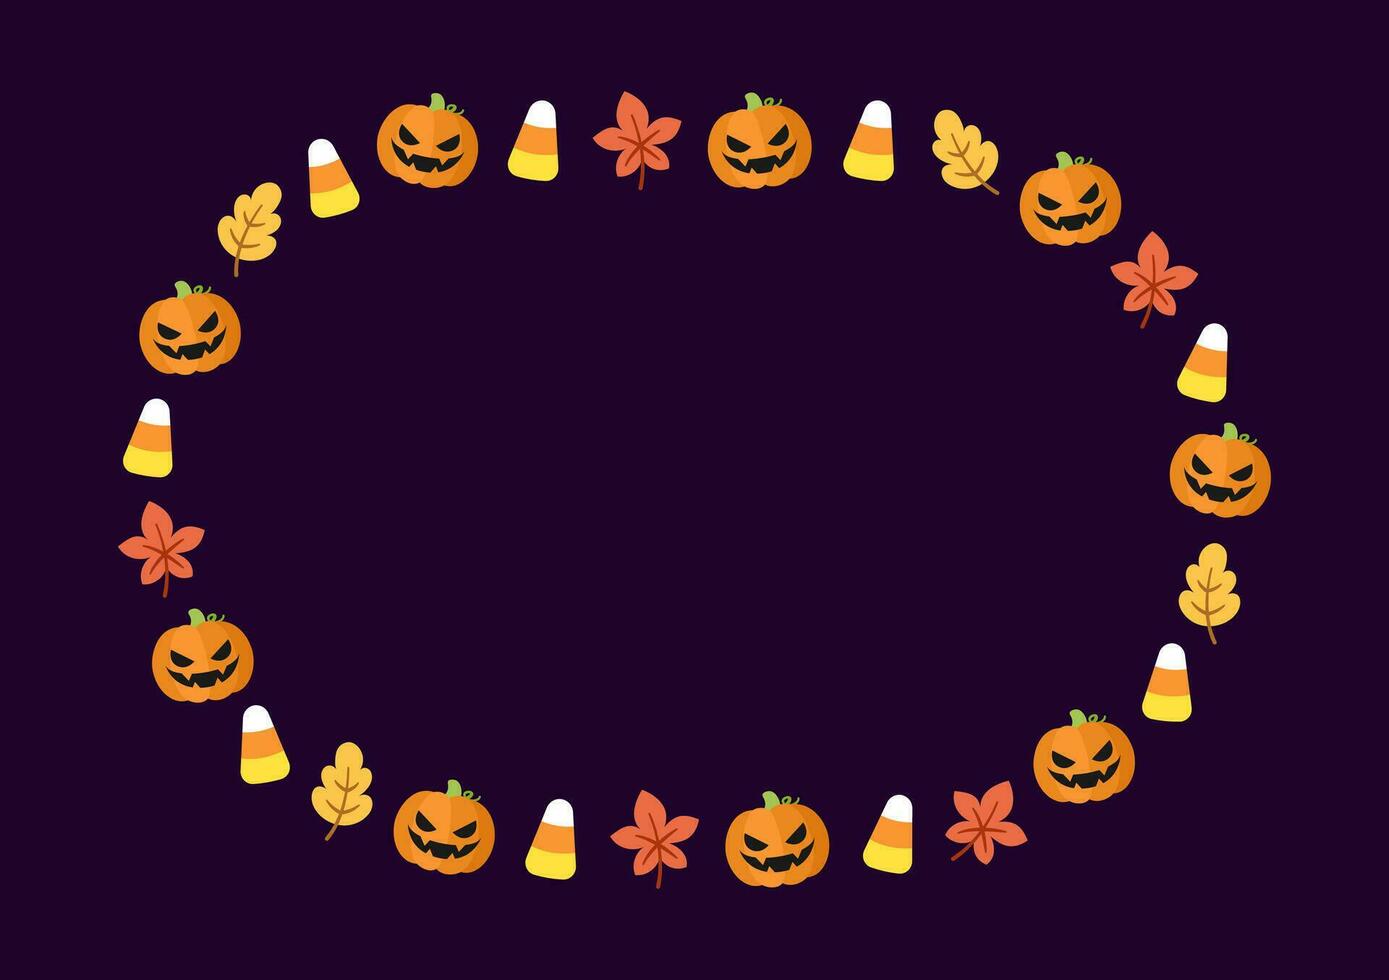 Cute Halloween frame template. Oval Halloween border design with jack o lantern, pumpkins, candy corn. Social media banner vector illustration